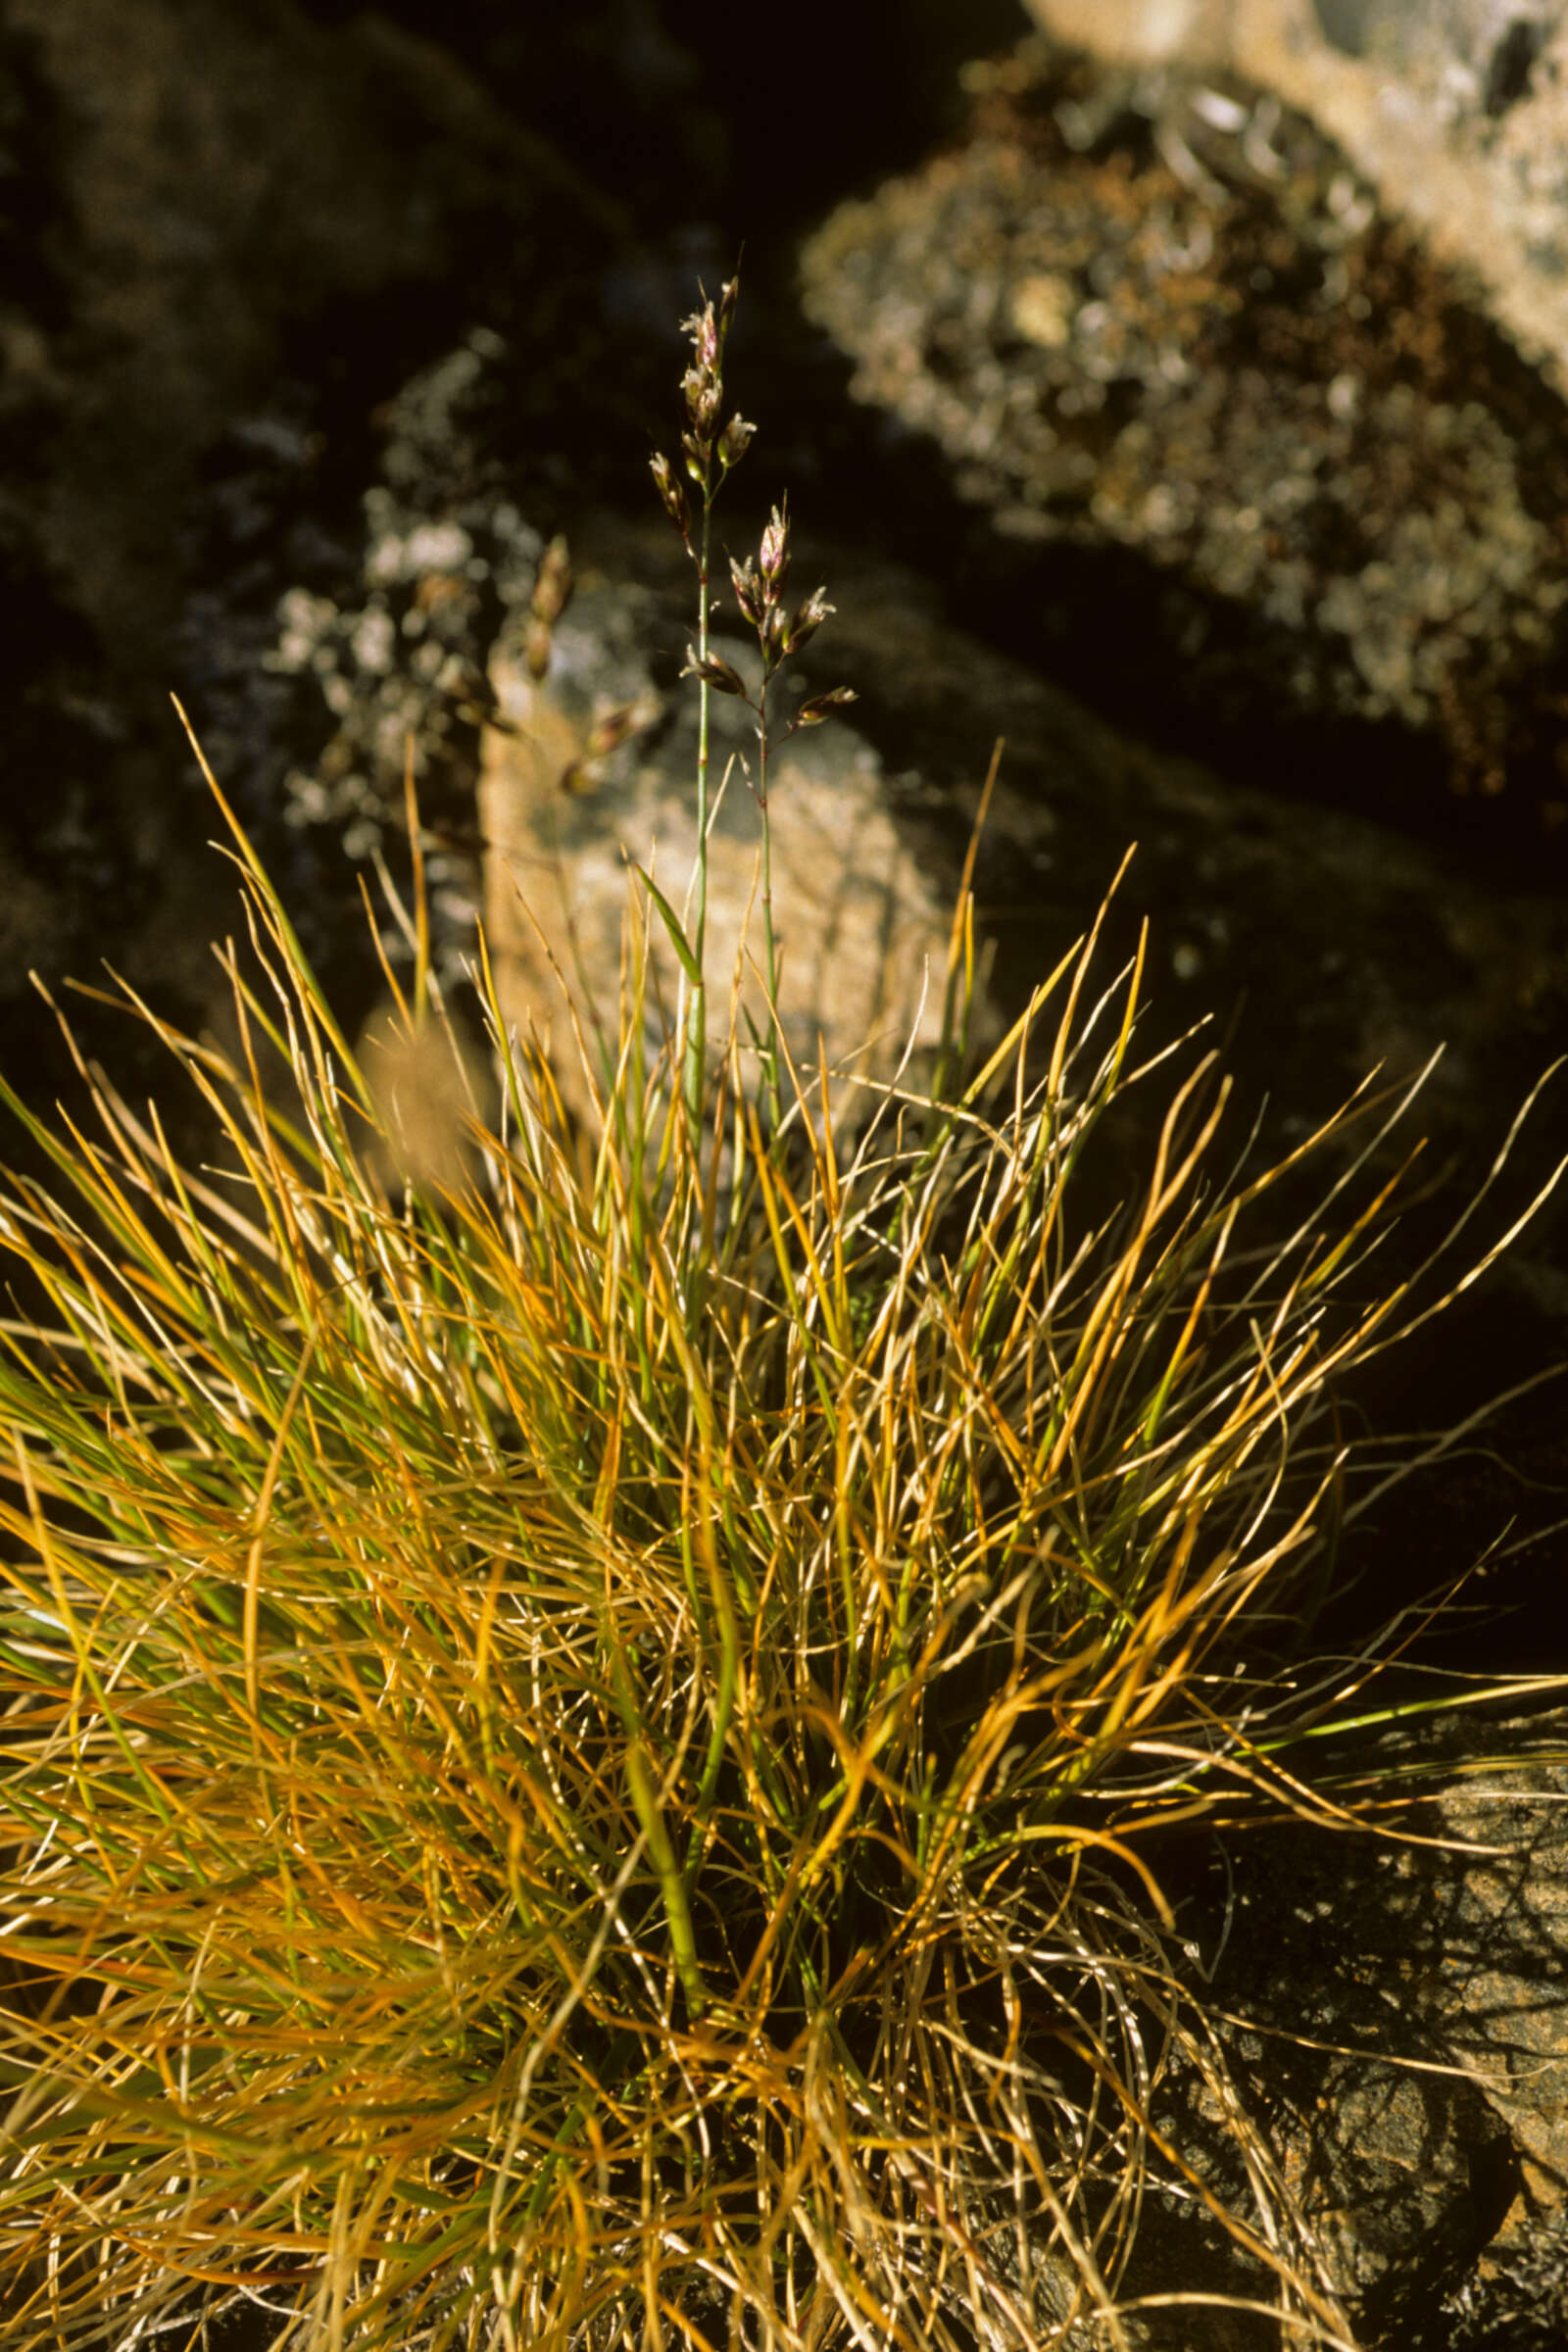 Sivun Anthoxanthum monticola (Bigelow) Veldkamp kuva